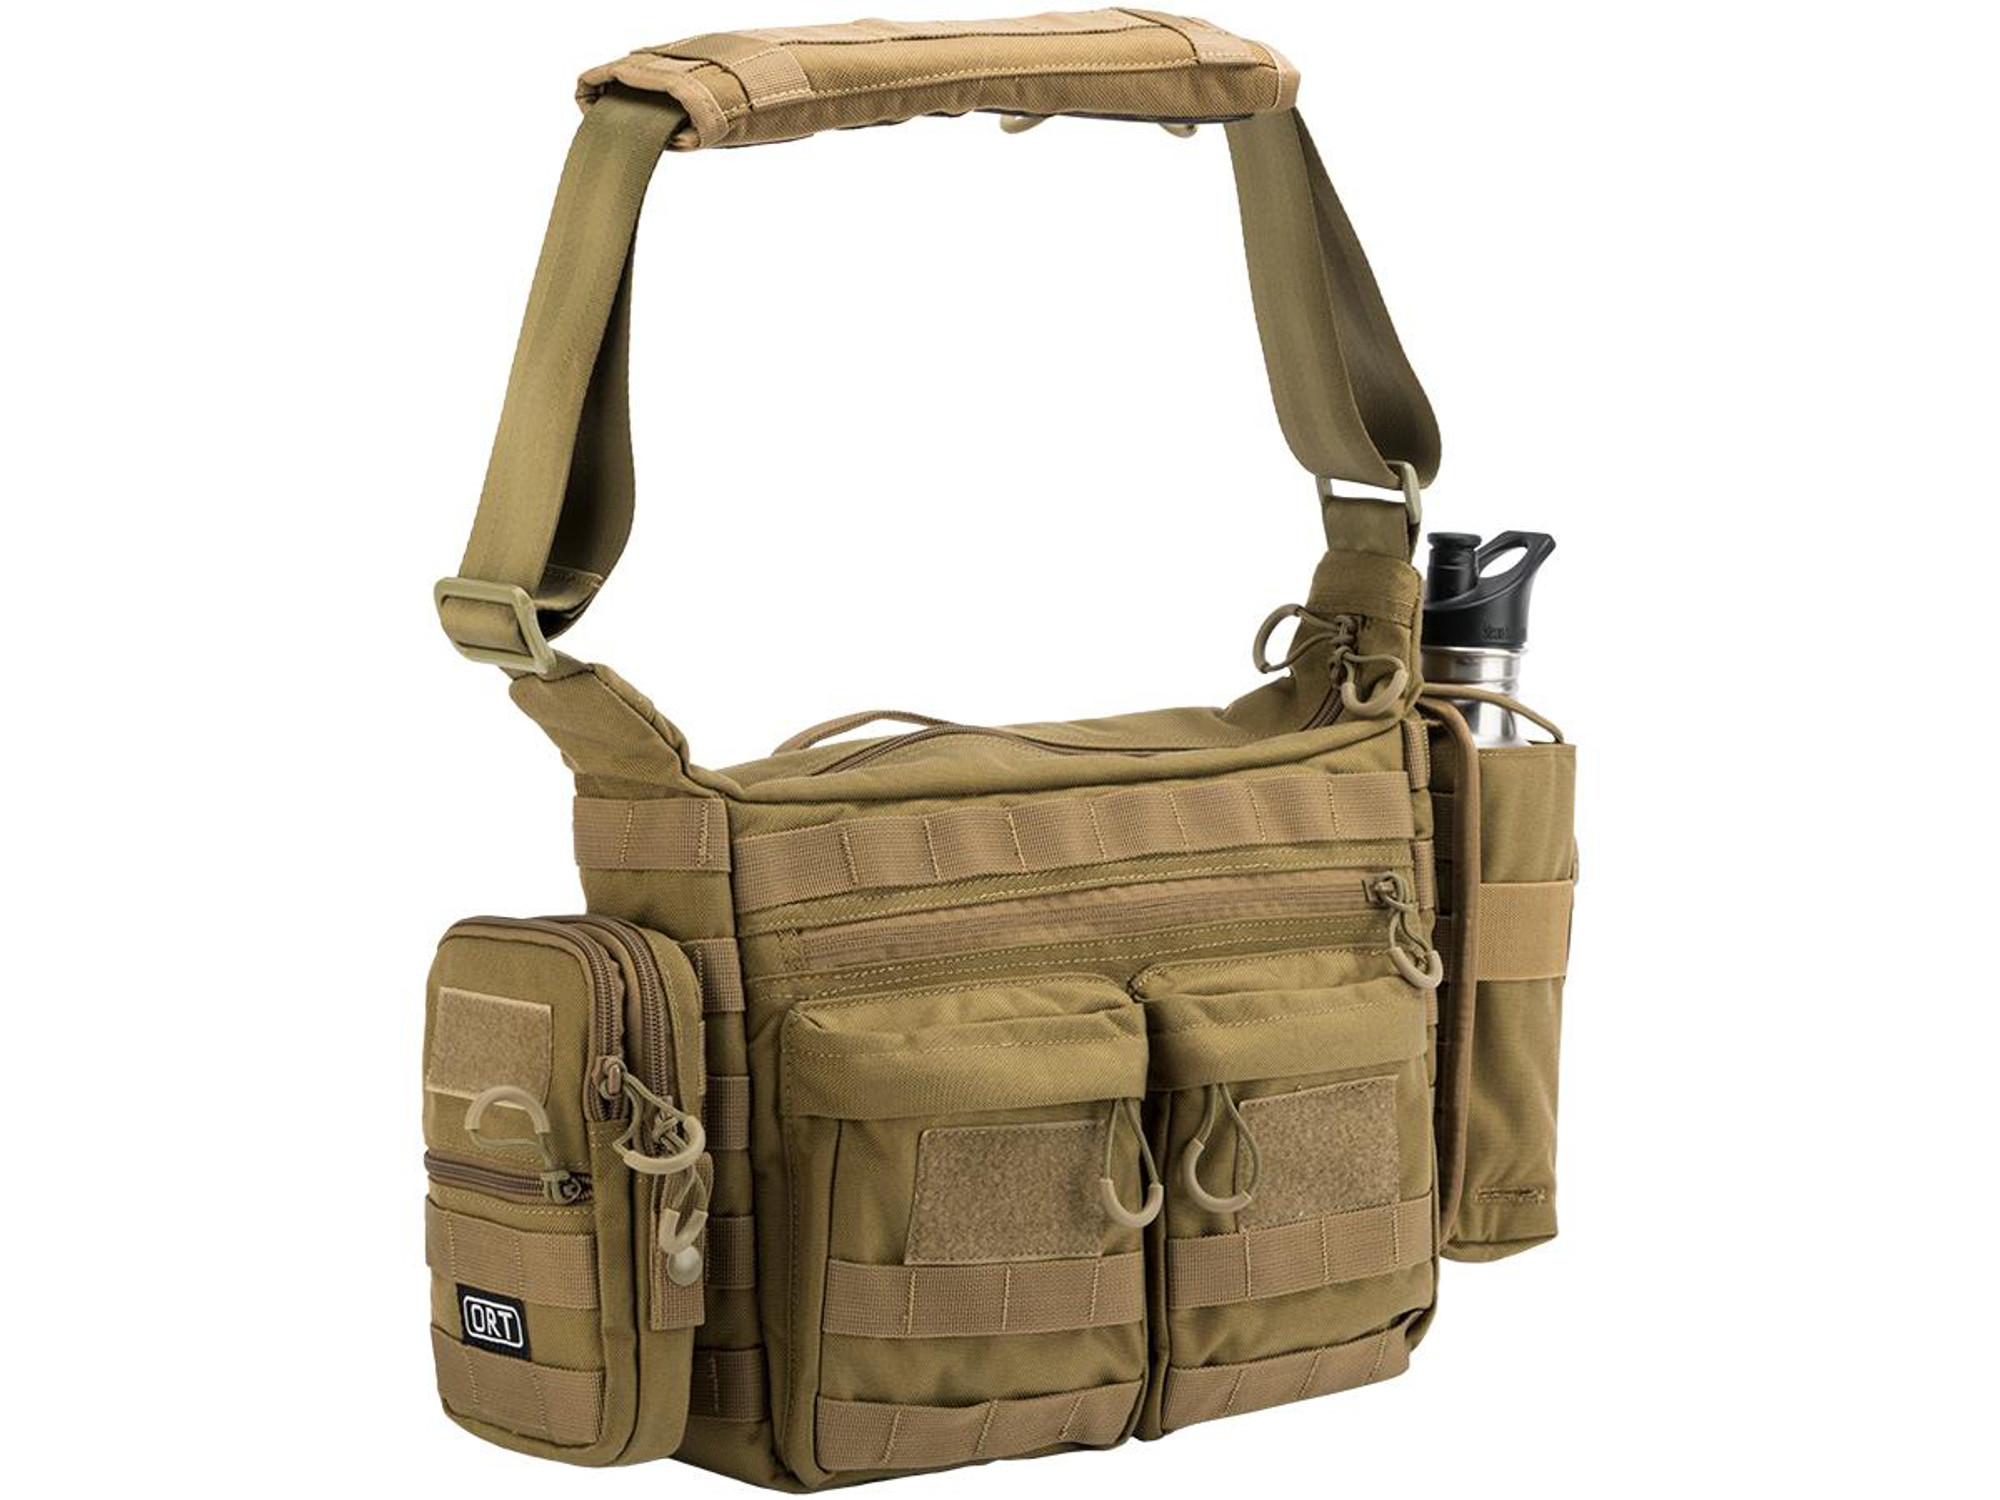 G&P ORT Advanced Range Bag - Tan